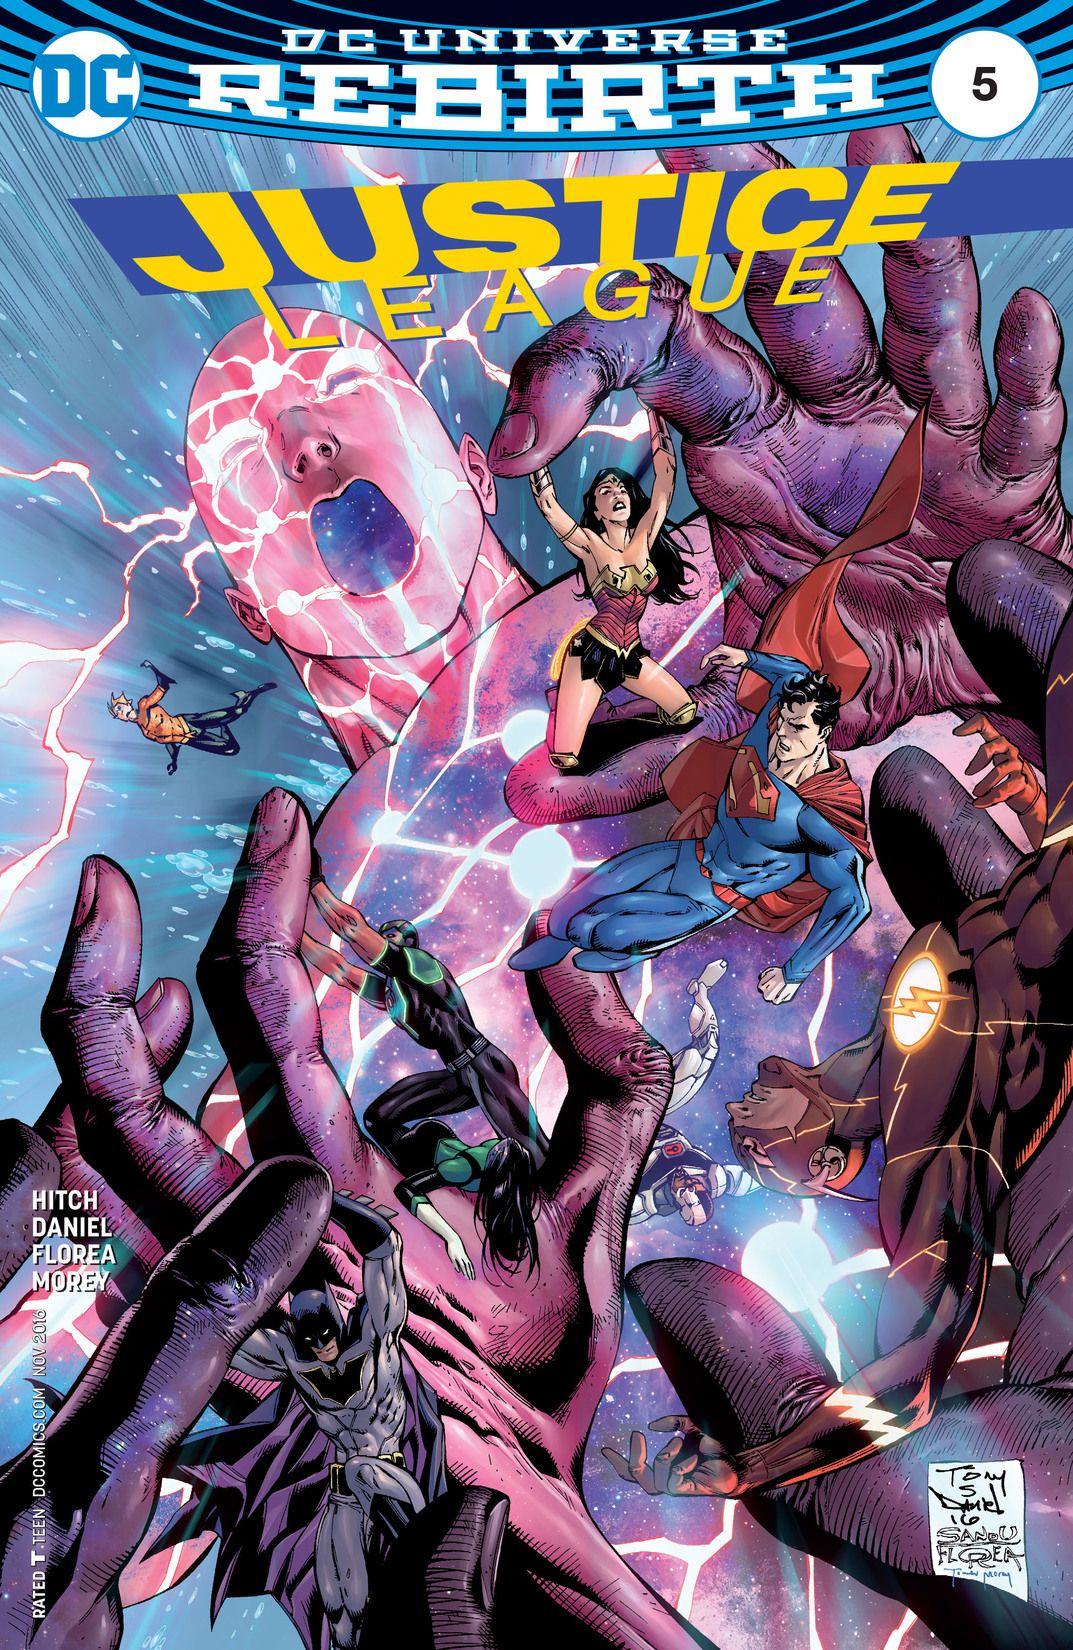 Justice League Vol. 3 #5